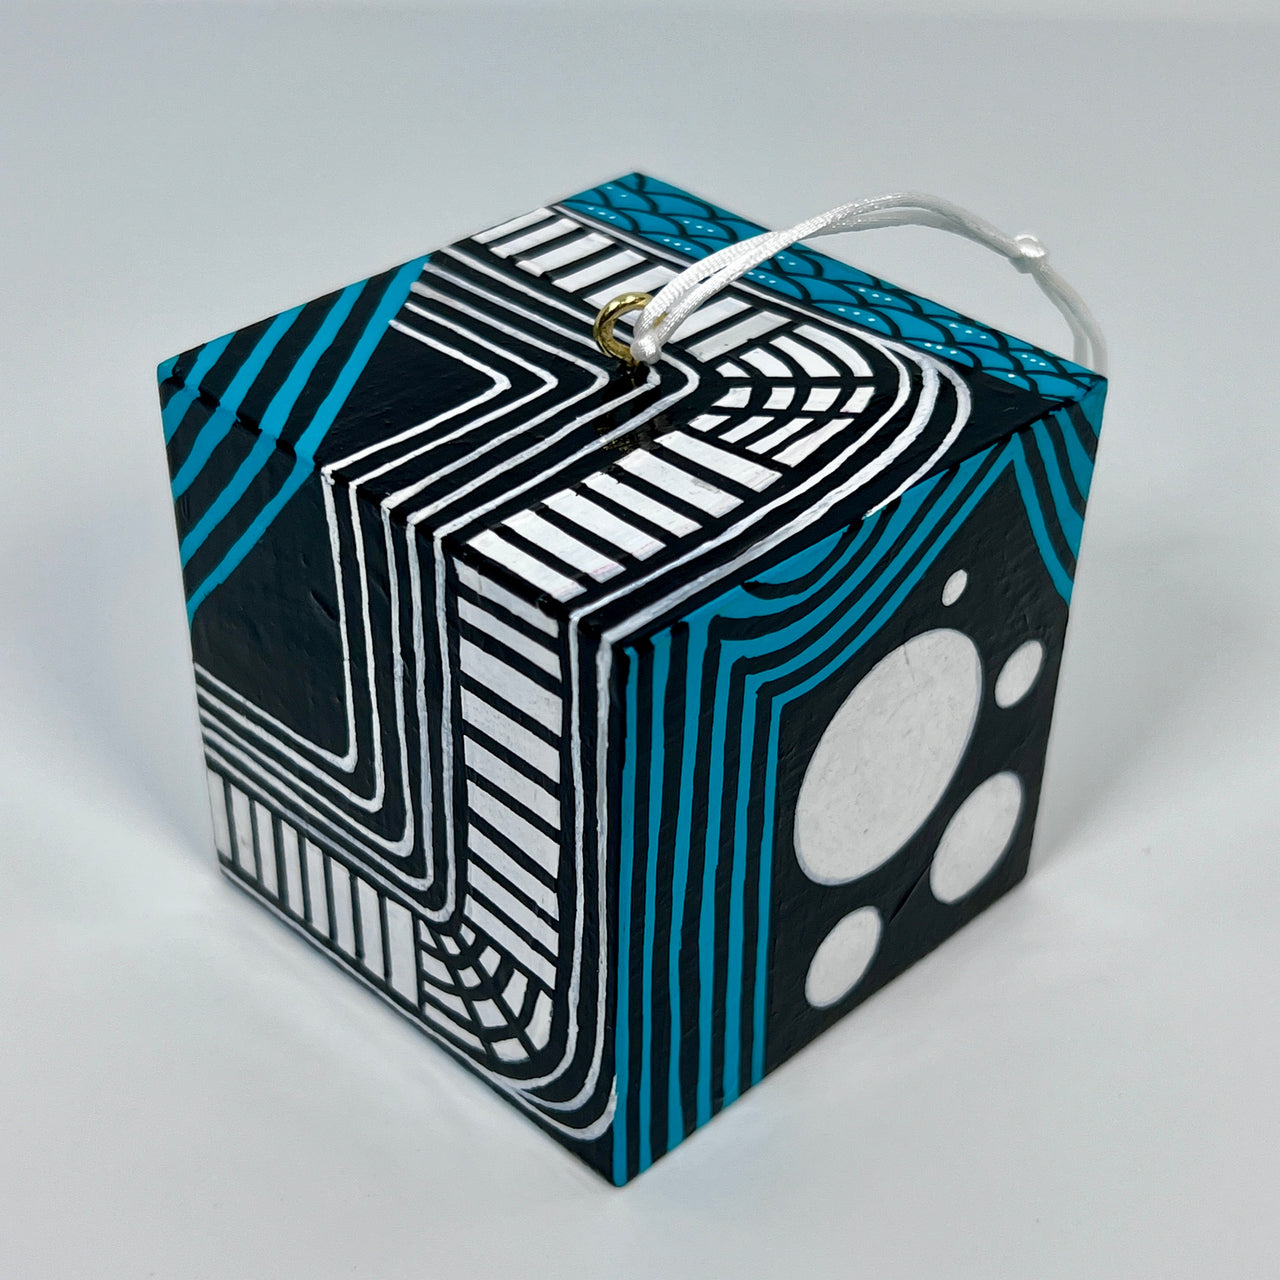 #3 - 3D Cube Art - 2.25" cube